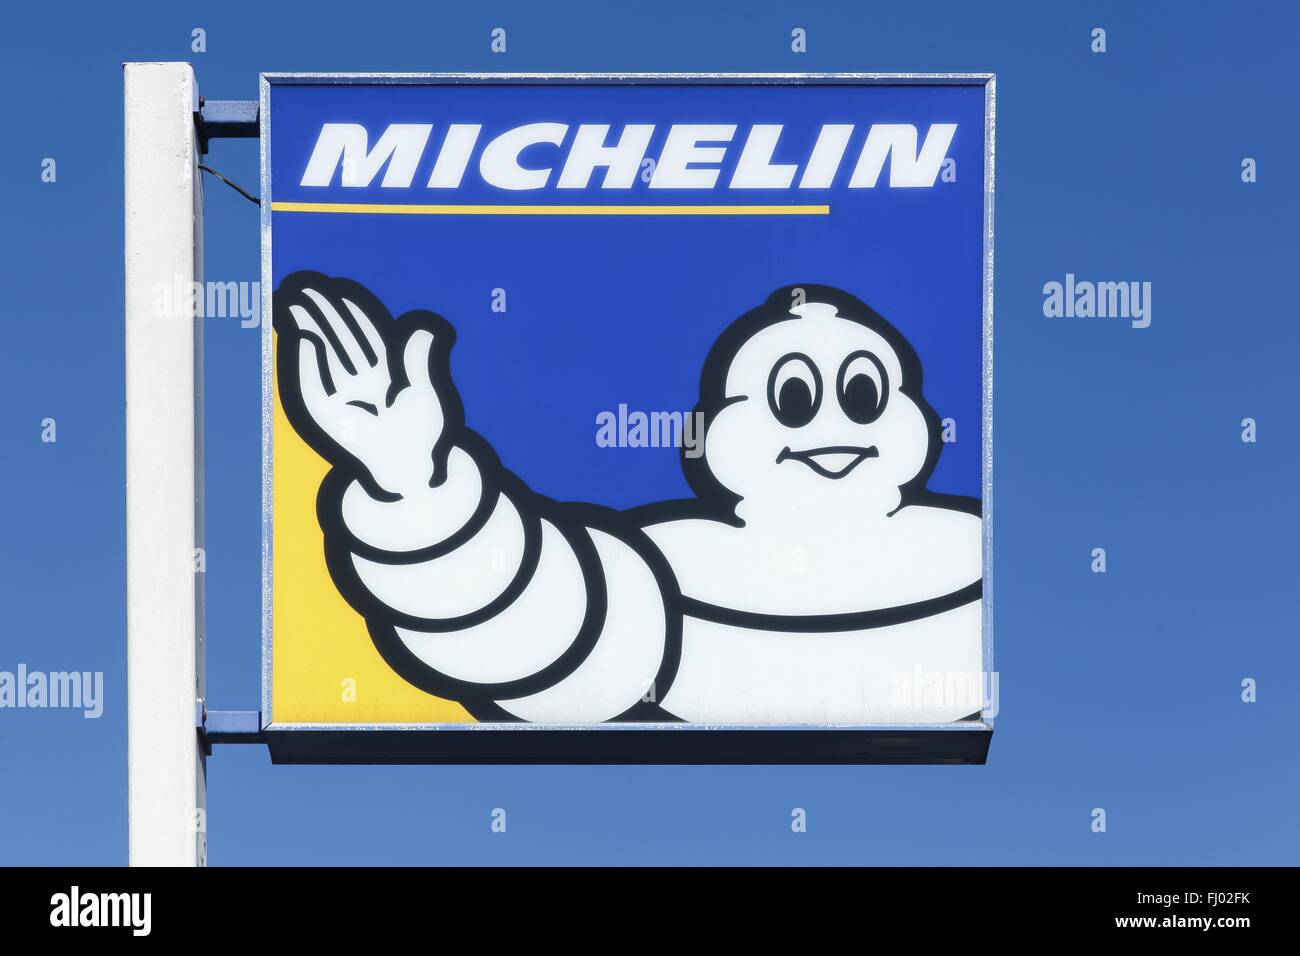 Michelin logo on a pole Stock Photo - Alamy